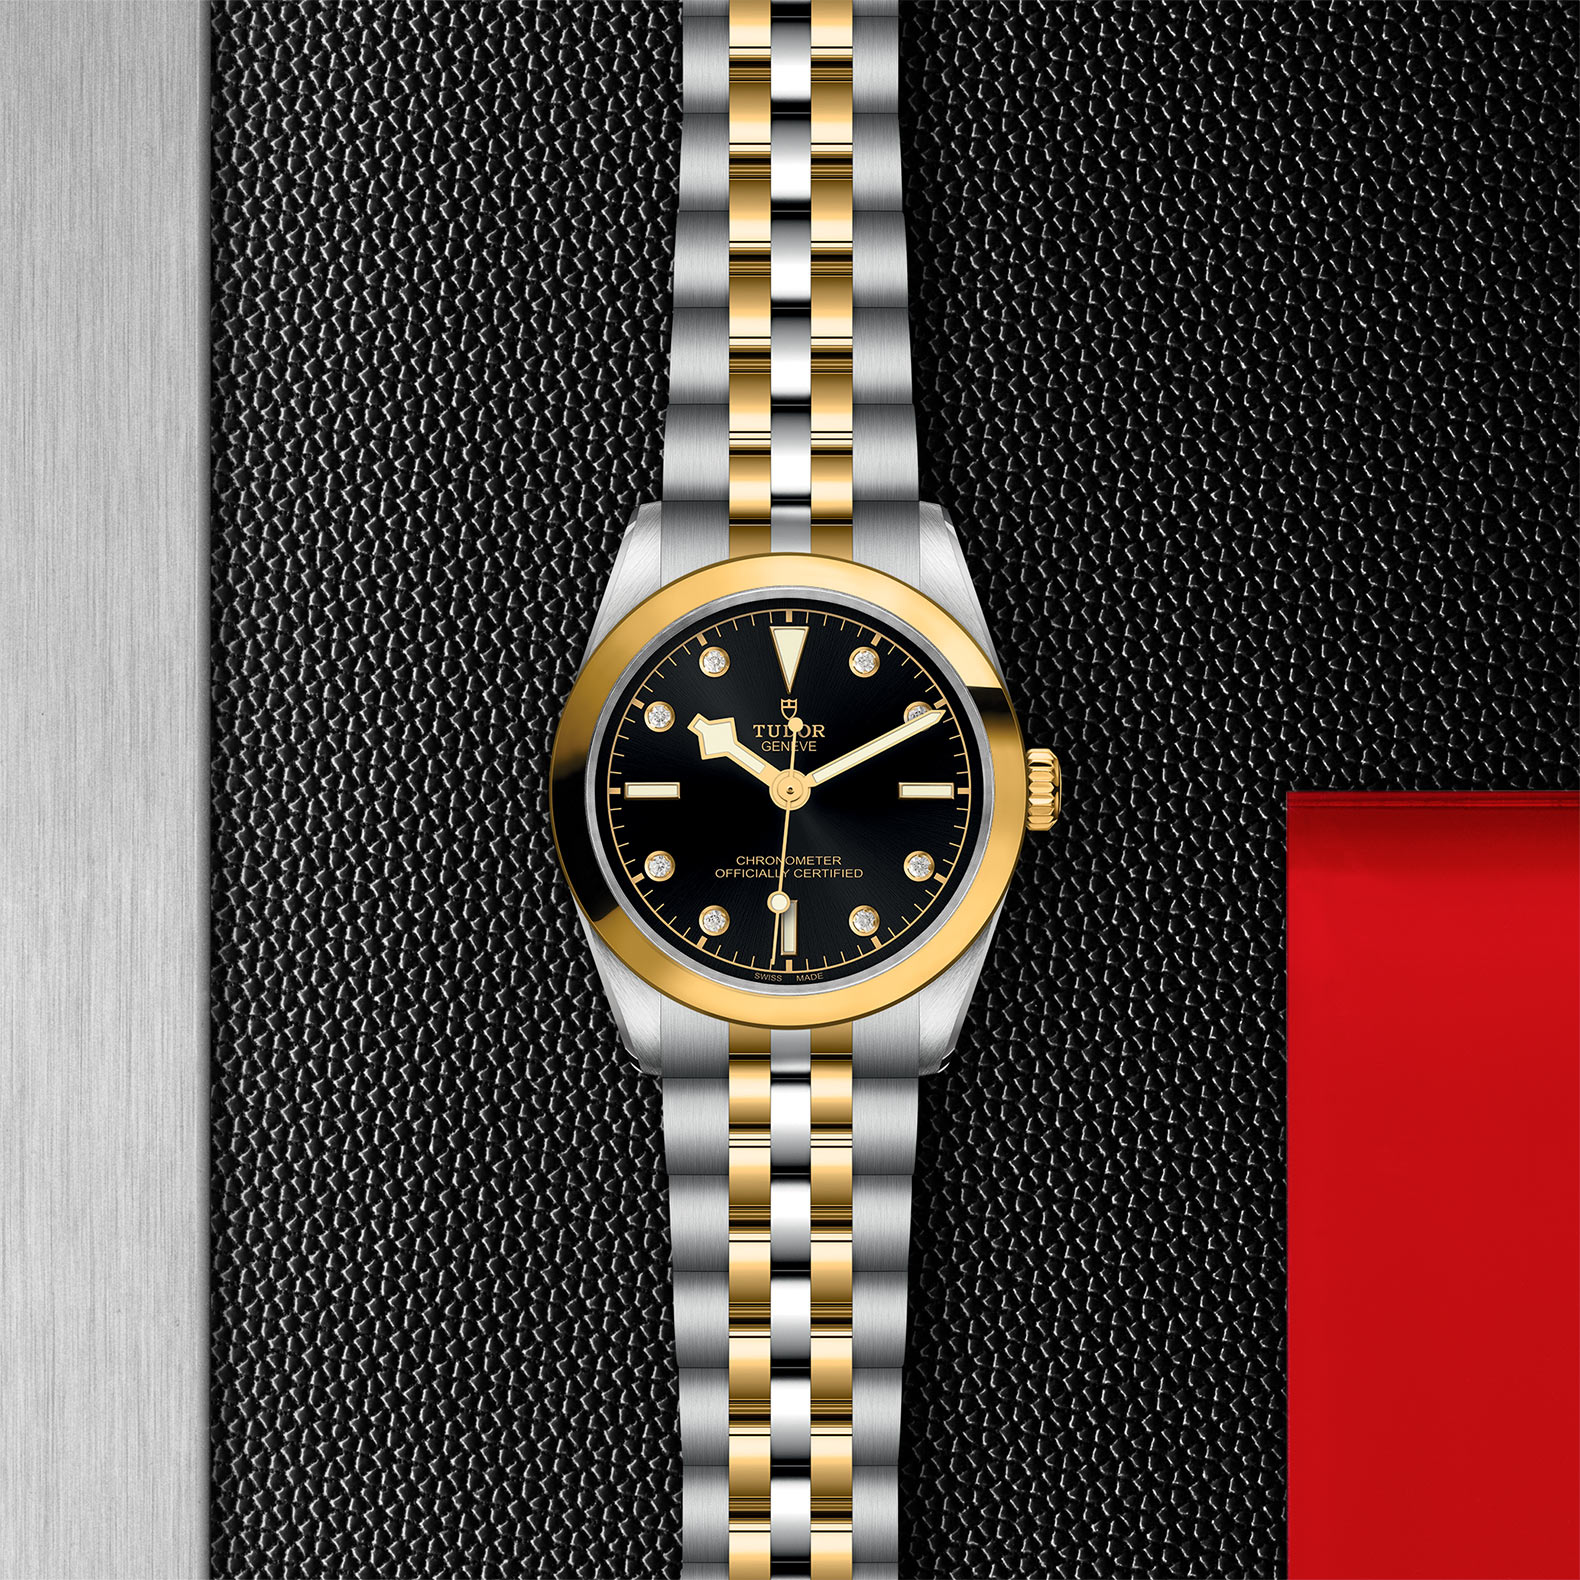 Tudor Watch Assets M79603 0006 Instore Flatlay